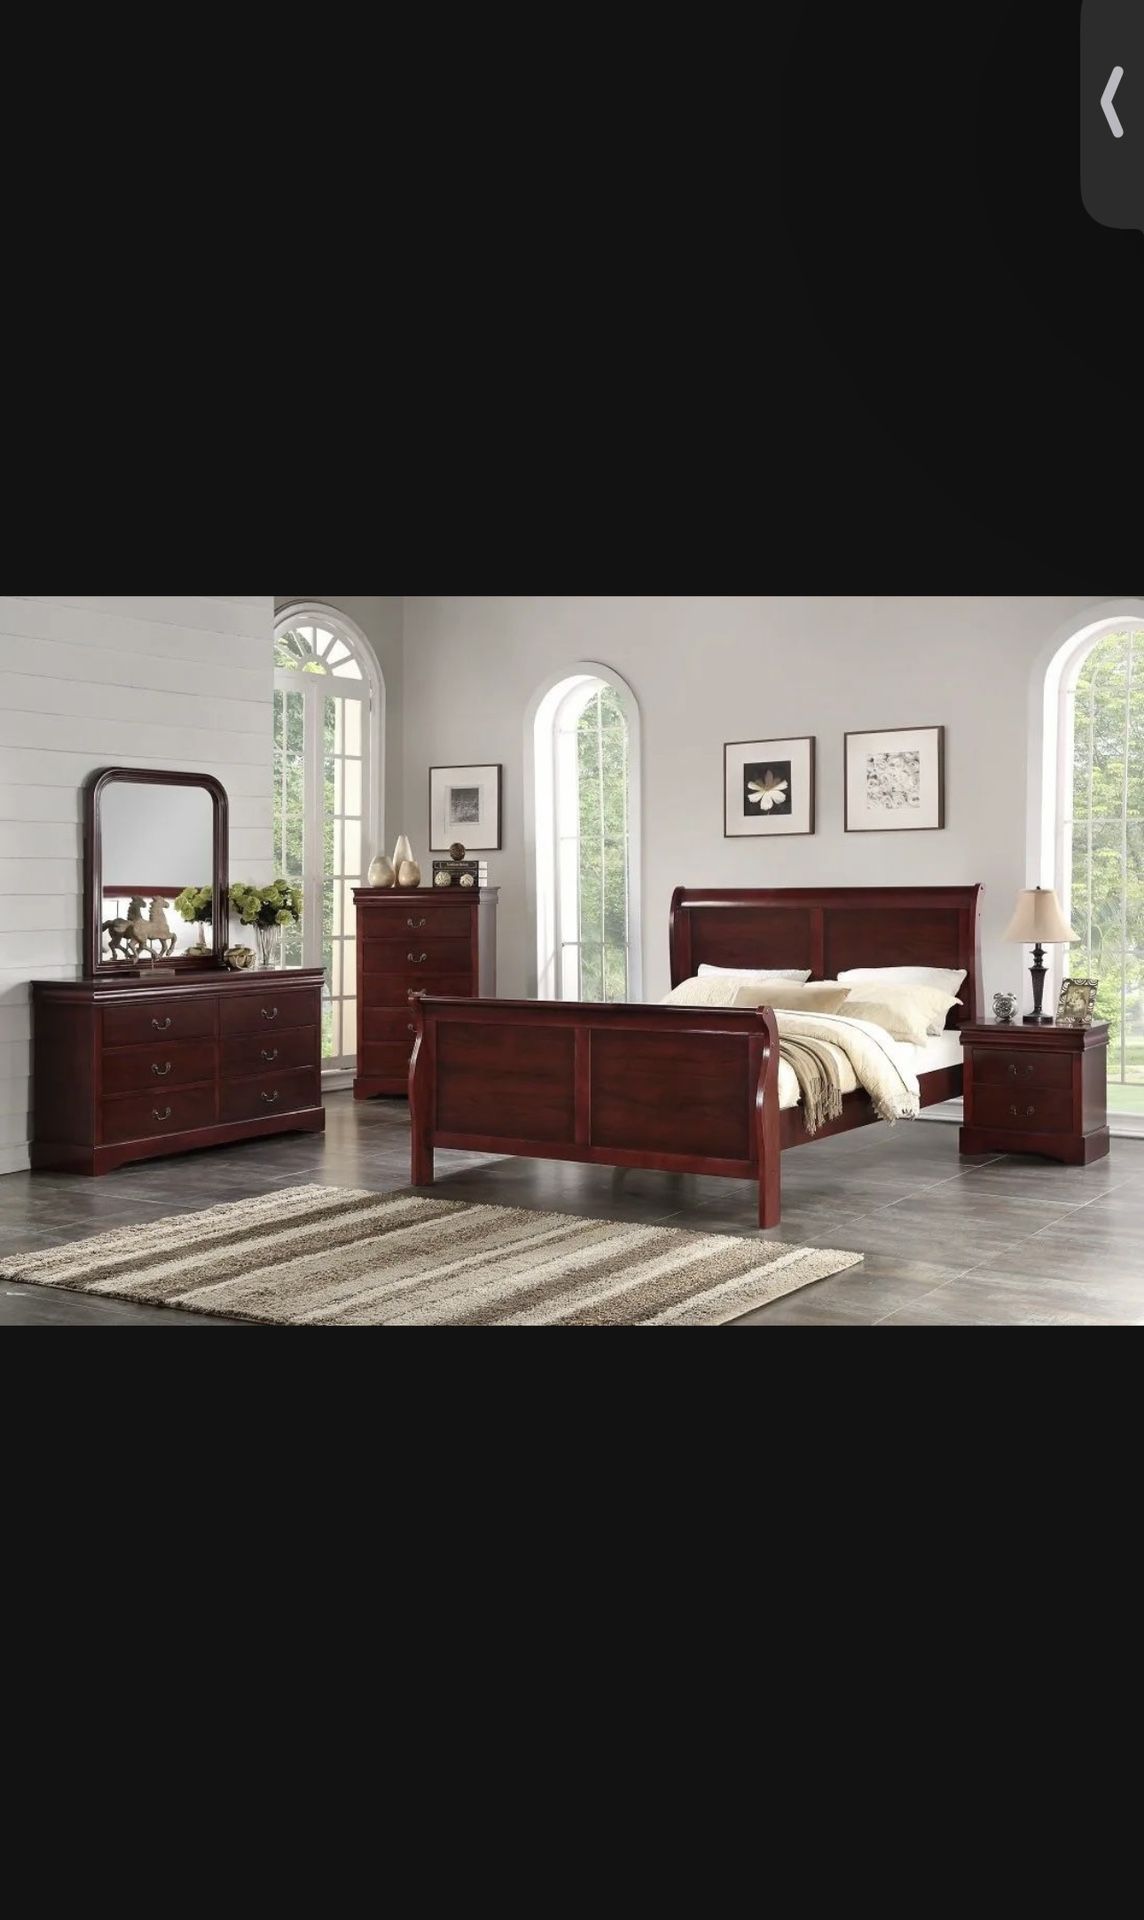 Brand New Complete Bedroom Set for $799!!!